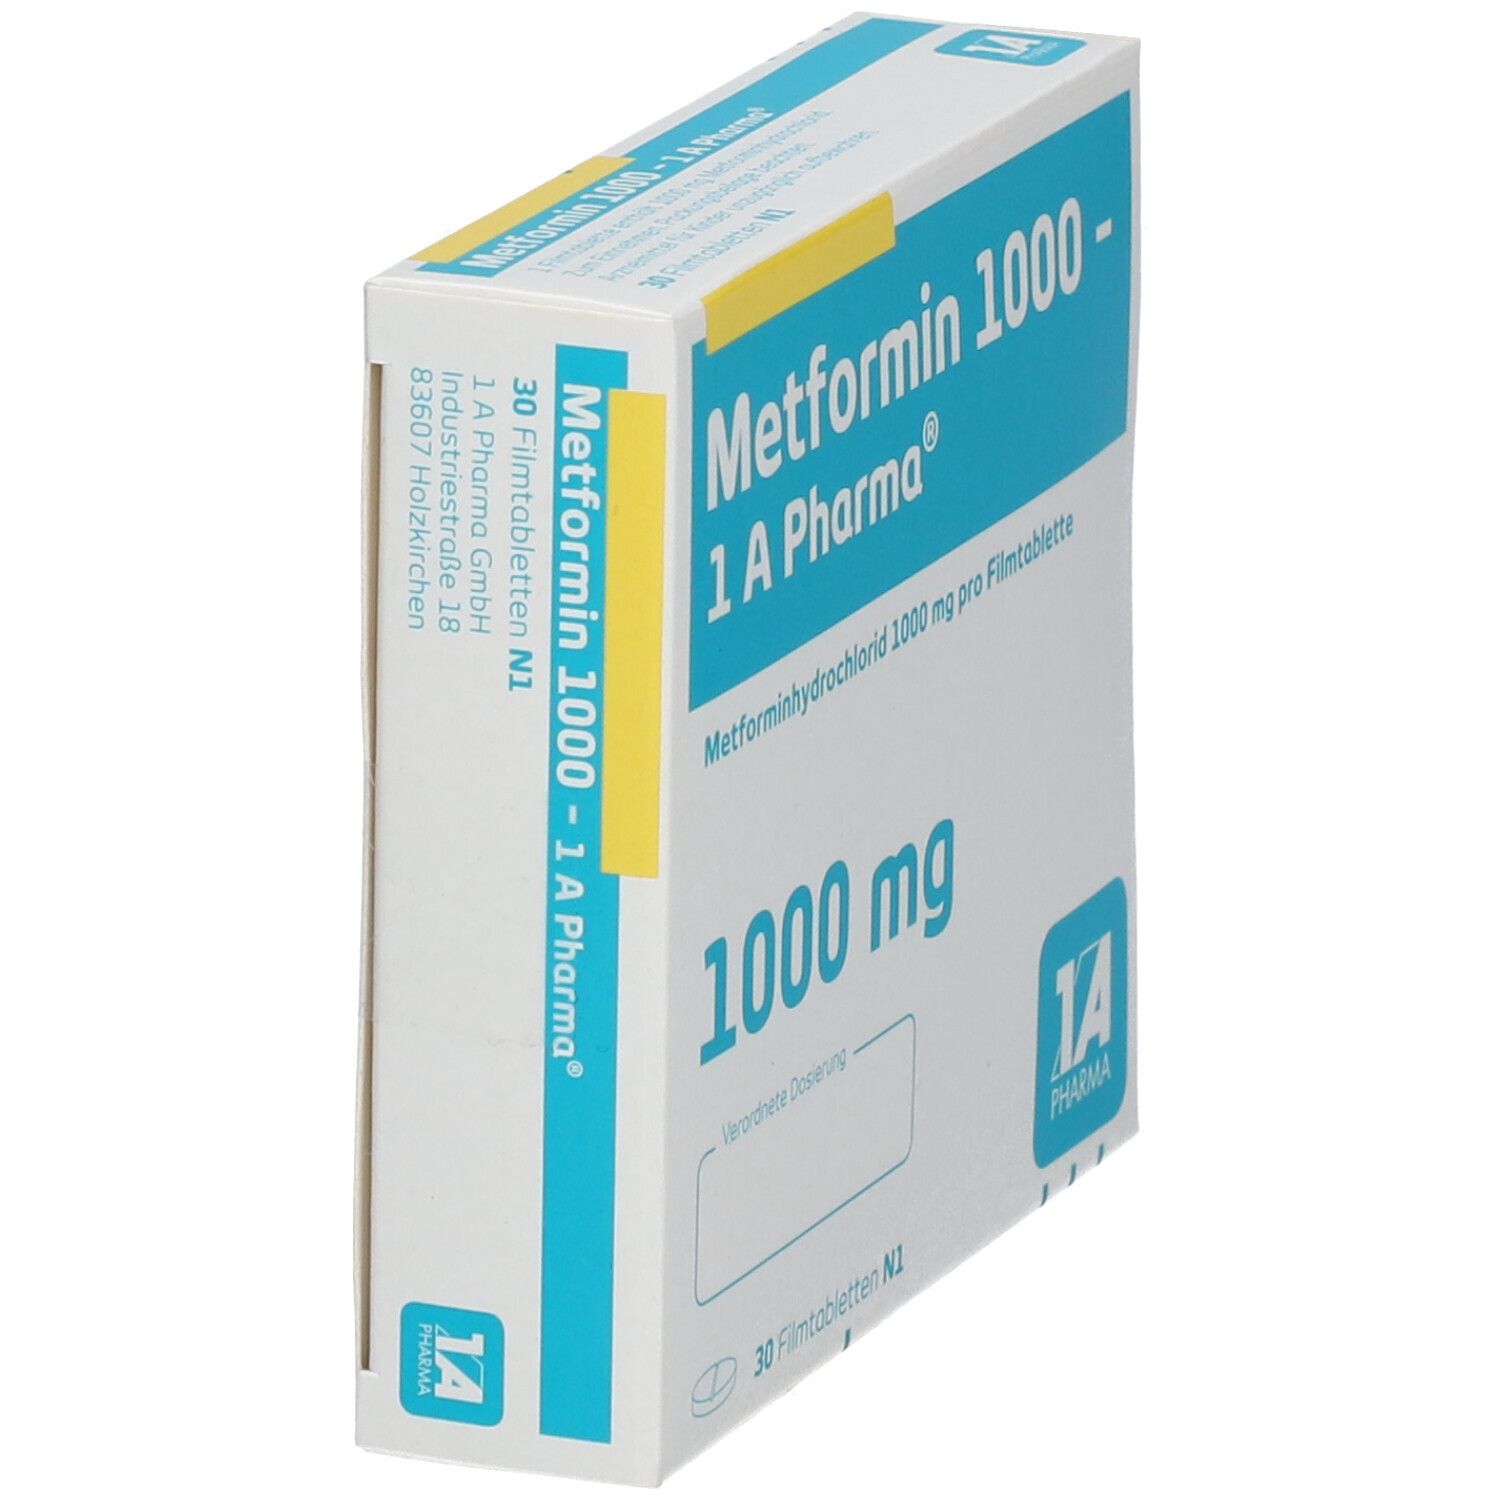 Metformin 1000-1A Pharma®